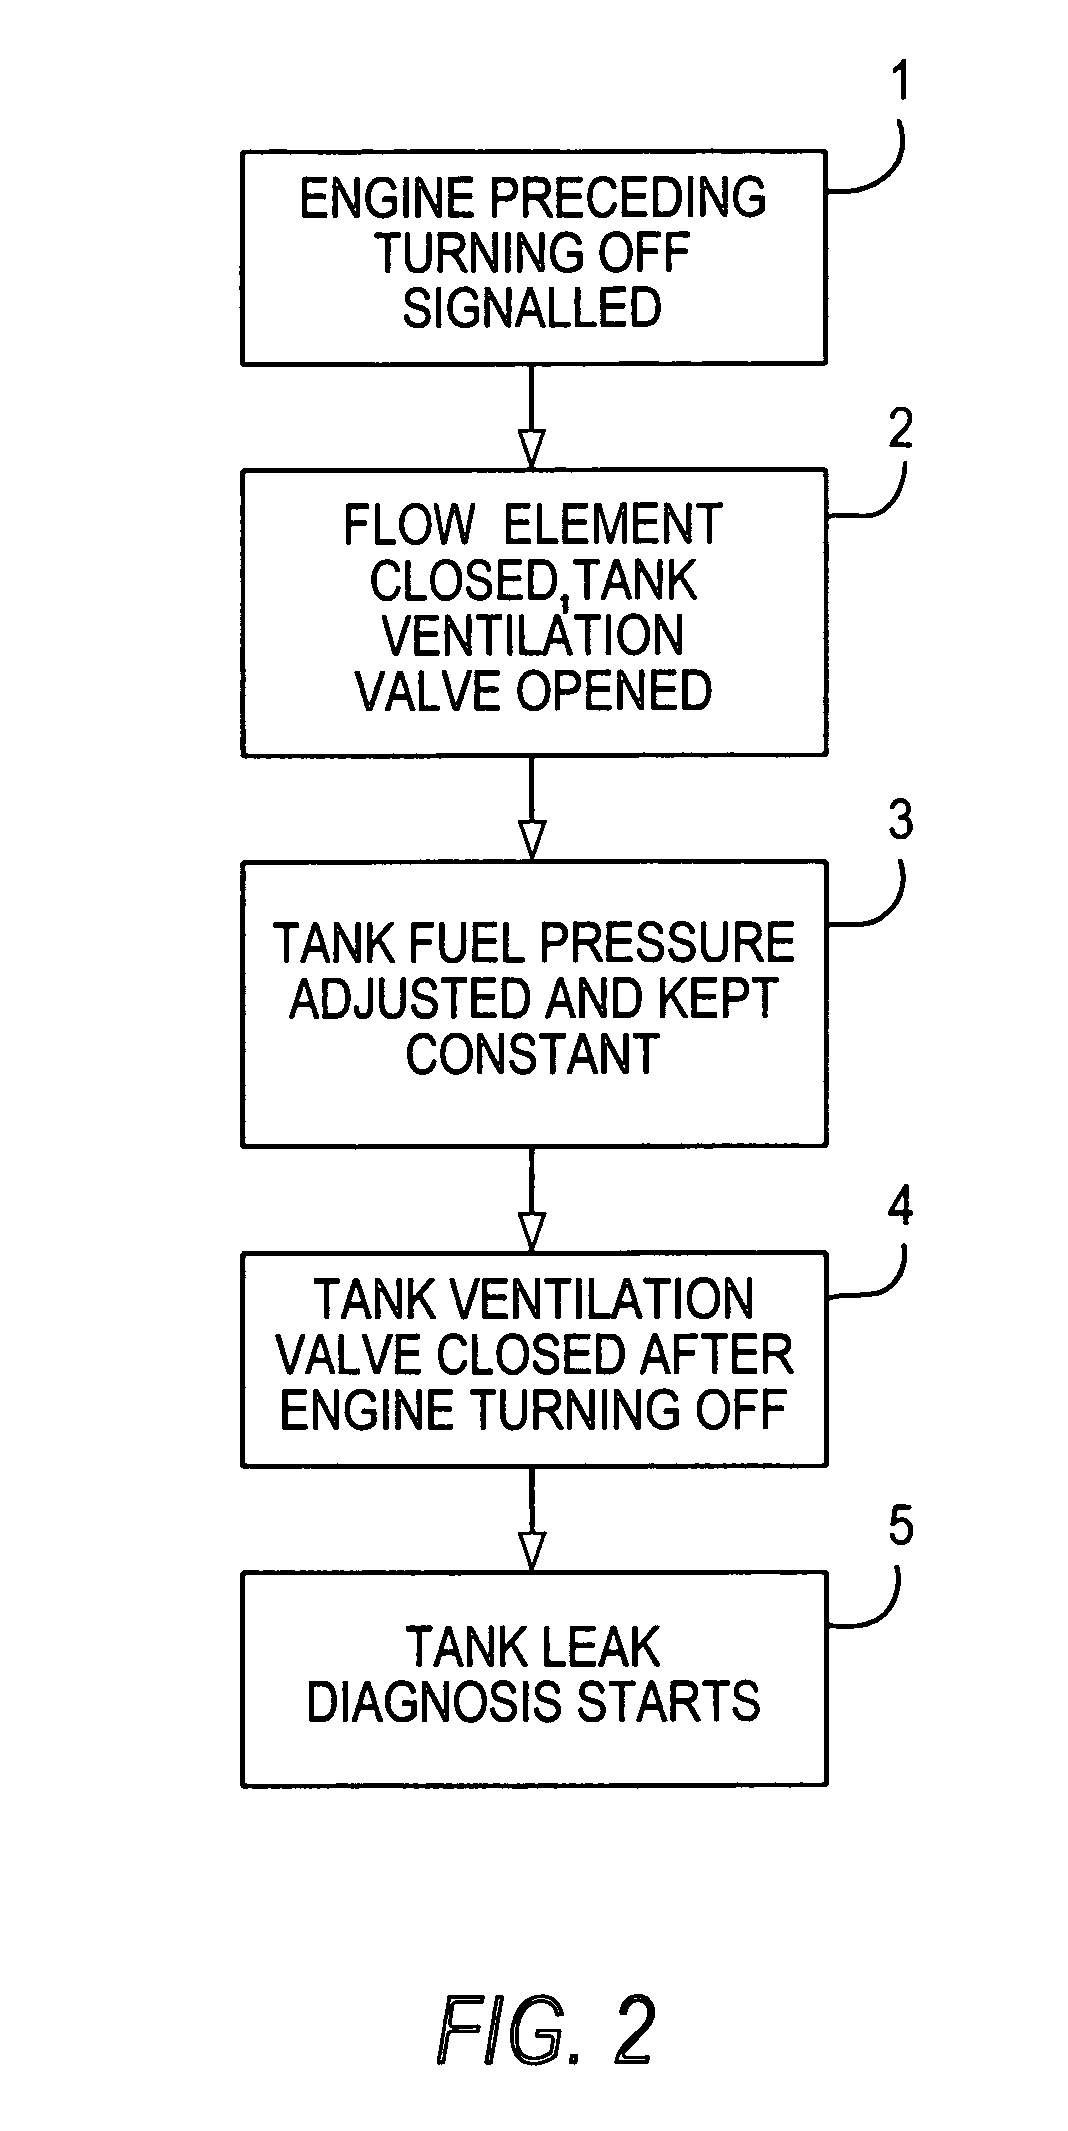 Method of tank leak diagnosis